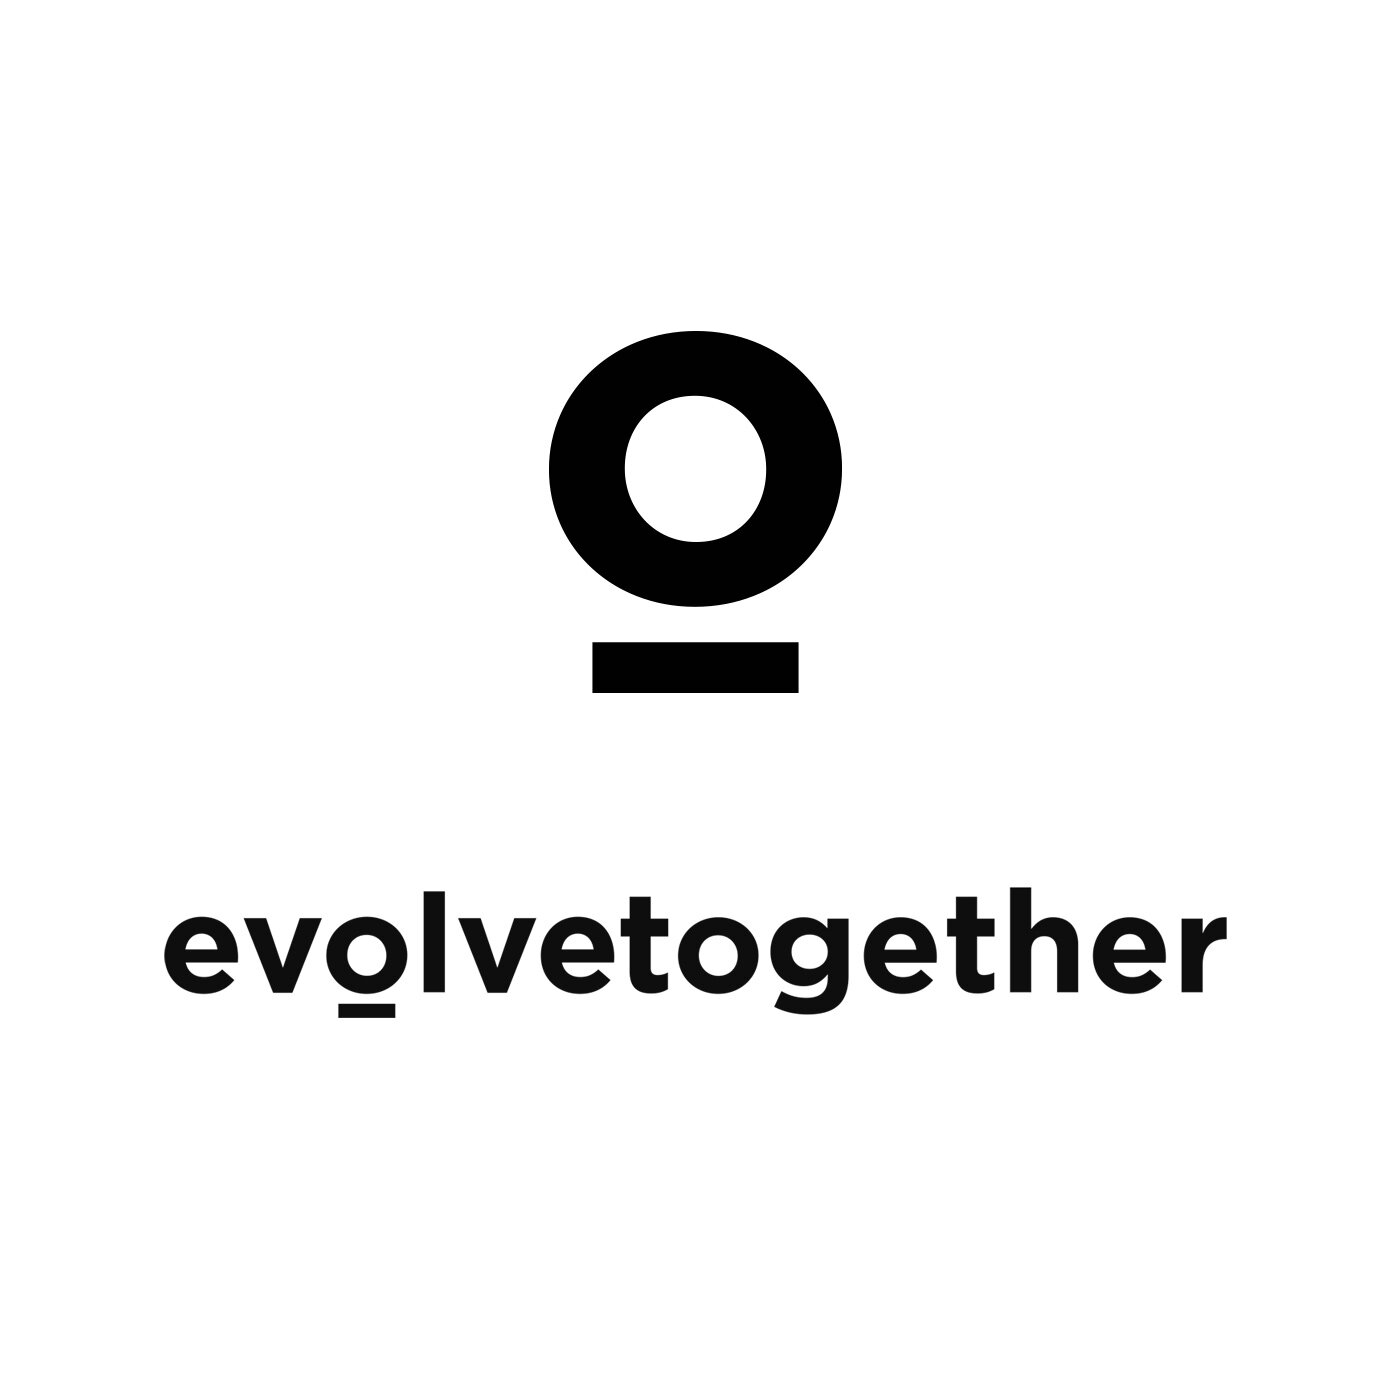 evolvetogether-logo-dark.jpg